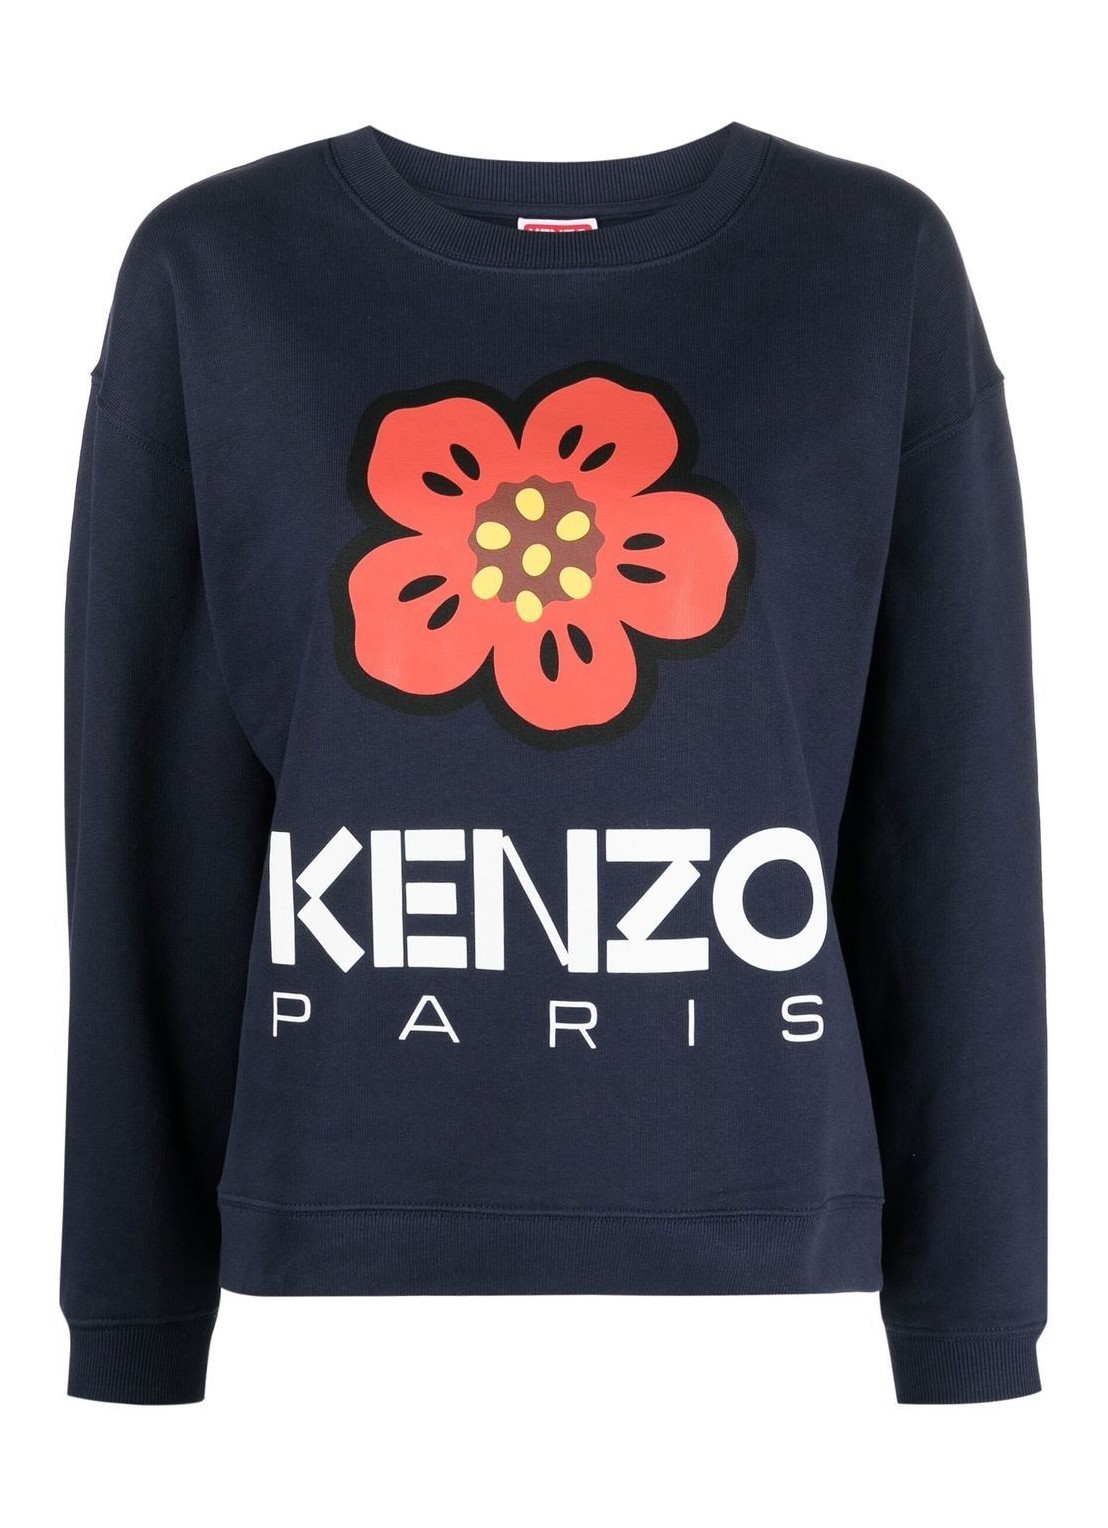 Sudadera kenzo kenzo paris regular sweatshirt - fd52sw0364me 77 talla XL
 